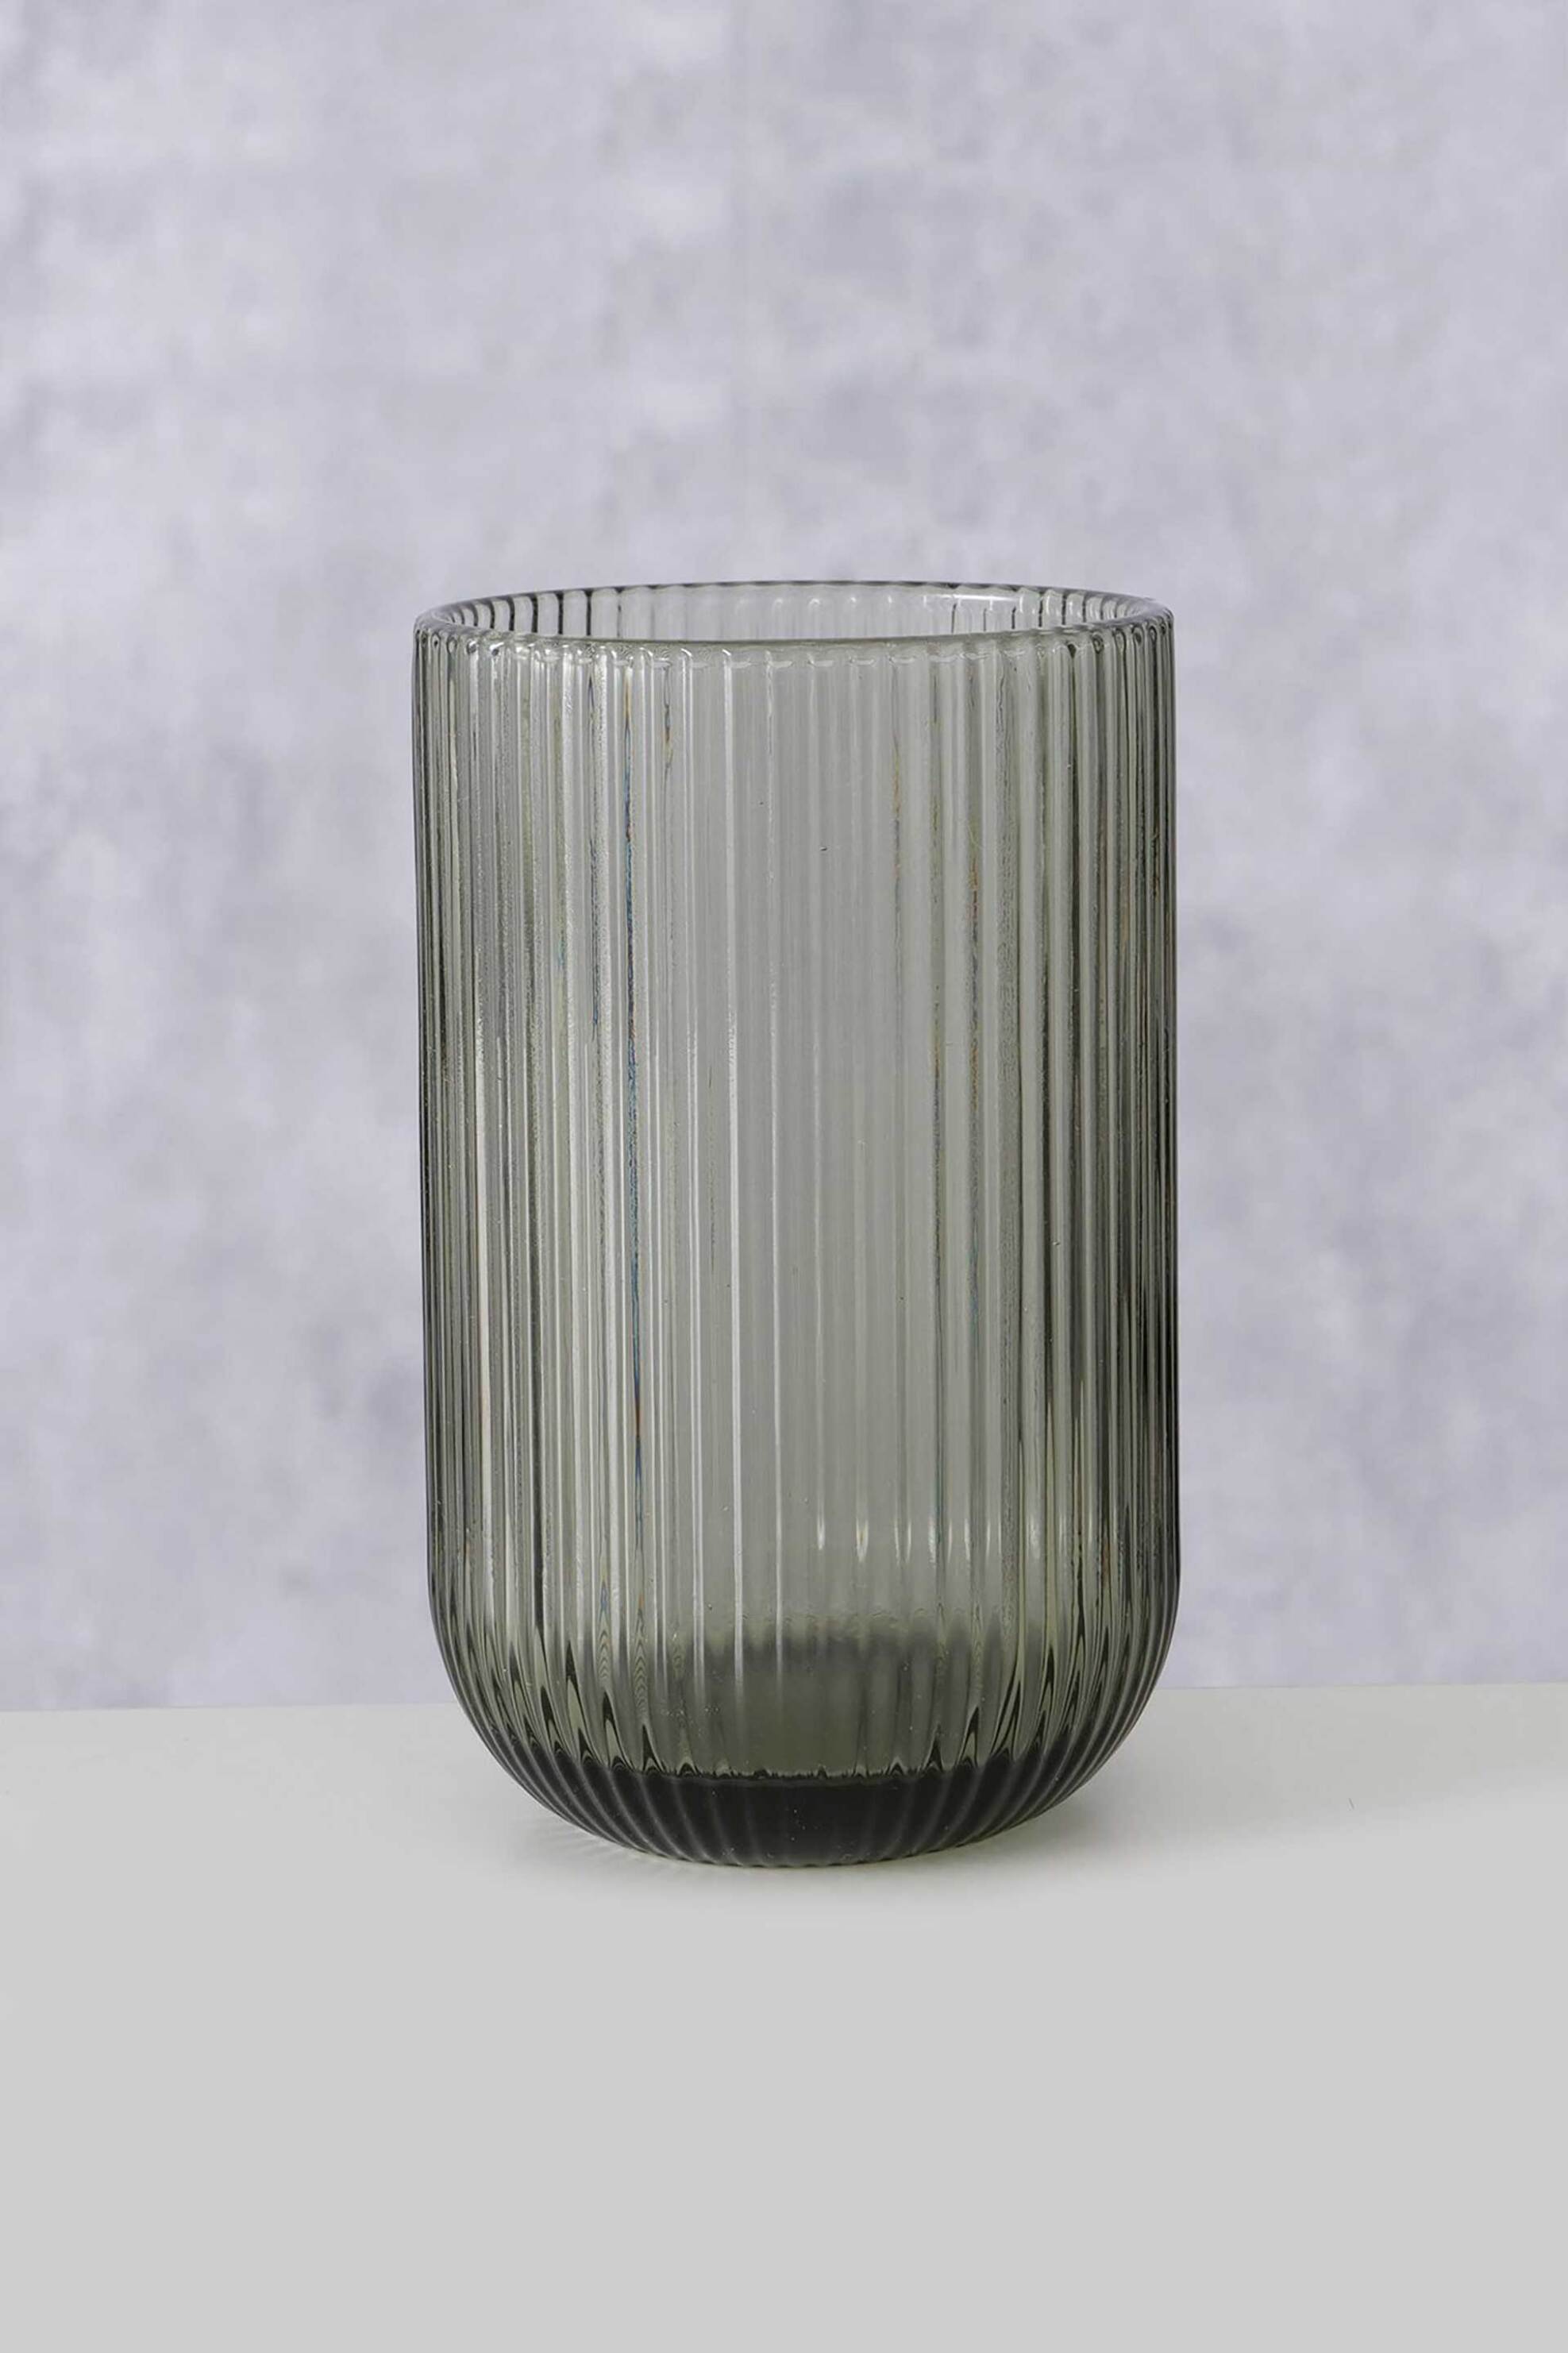 Home > ΚΟΥΖΙΝΑ > Υαλικά > Ποτήρια DOMUS HOMUS γυάλινο ποτήρι νερού "Rigano" 13 x 8 cm γκρι - 20-25-067